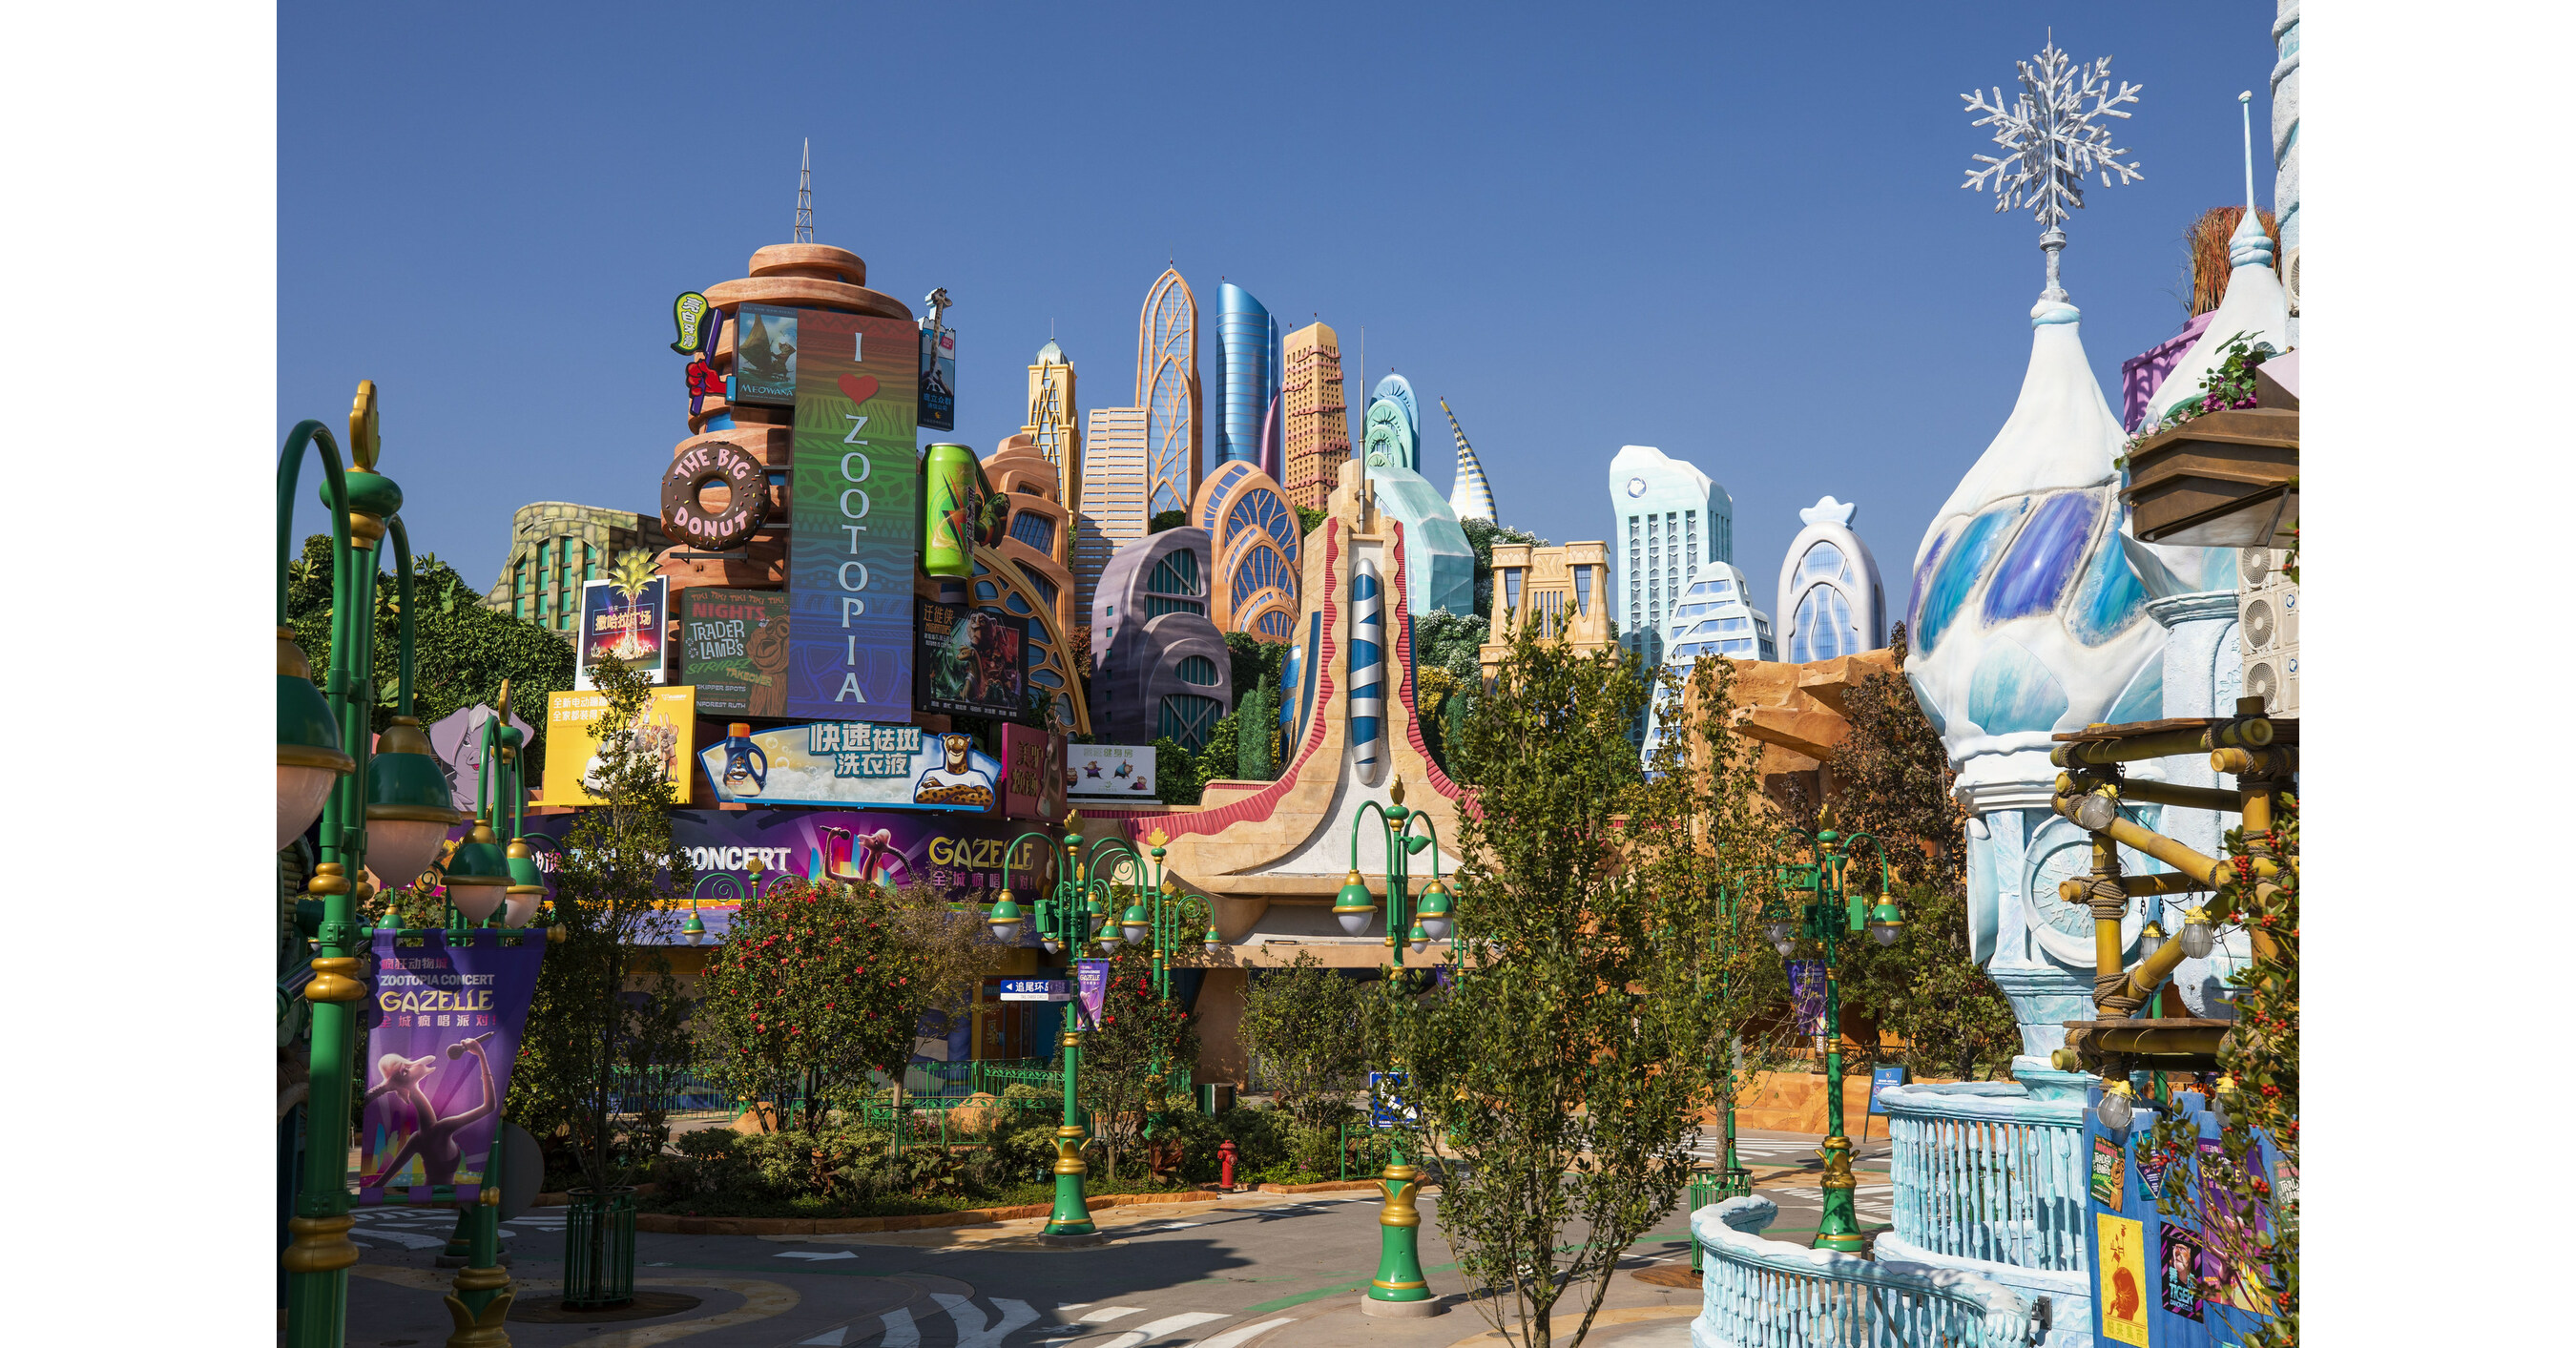 New Shanghai Disney's 'Zootopia' Attraction & Dining Info